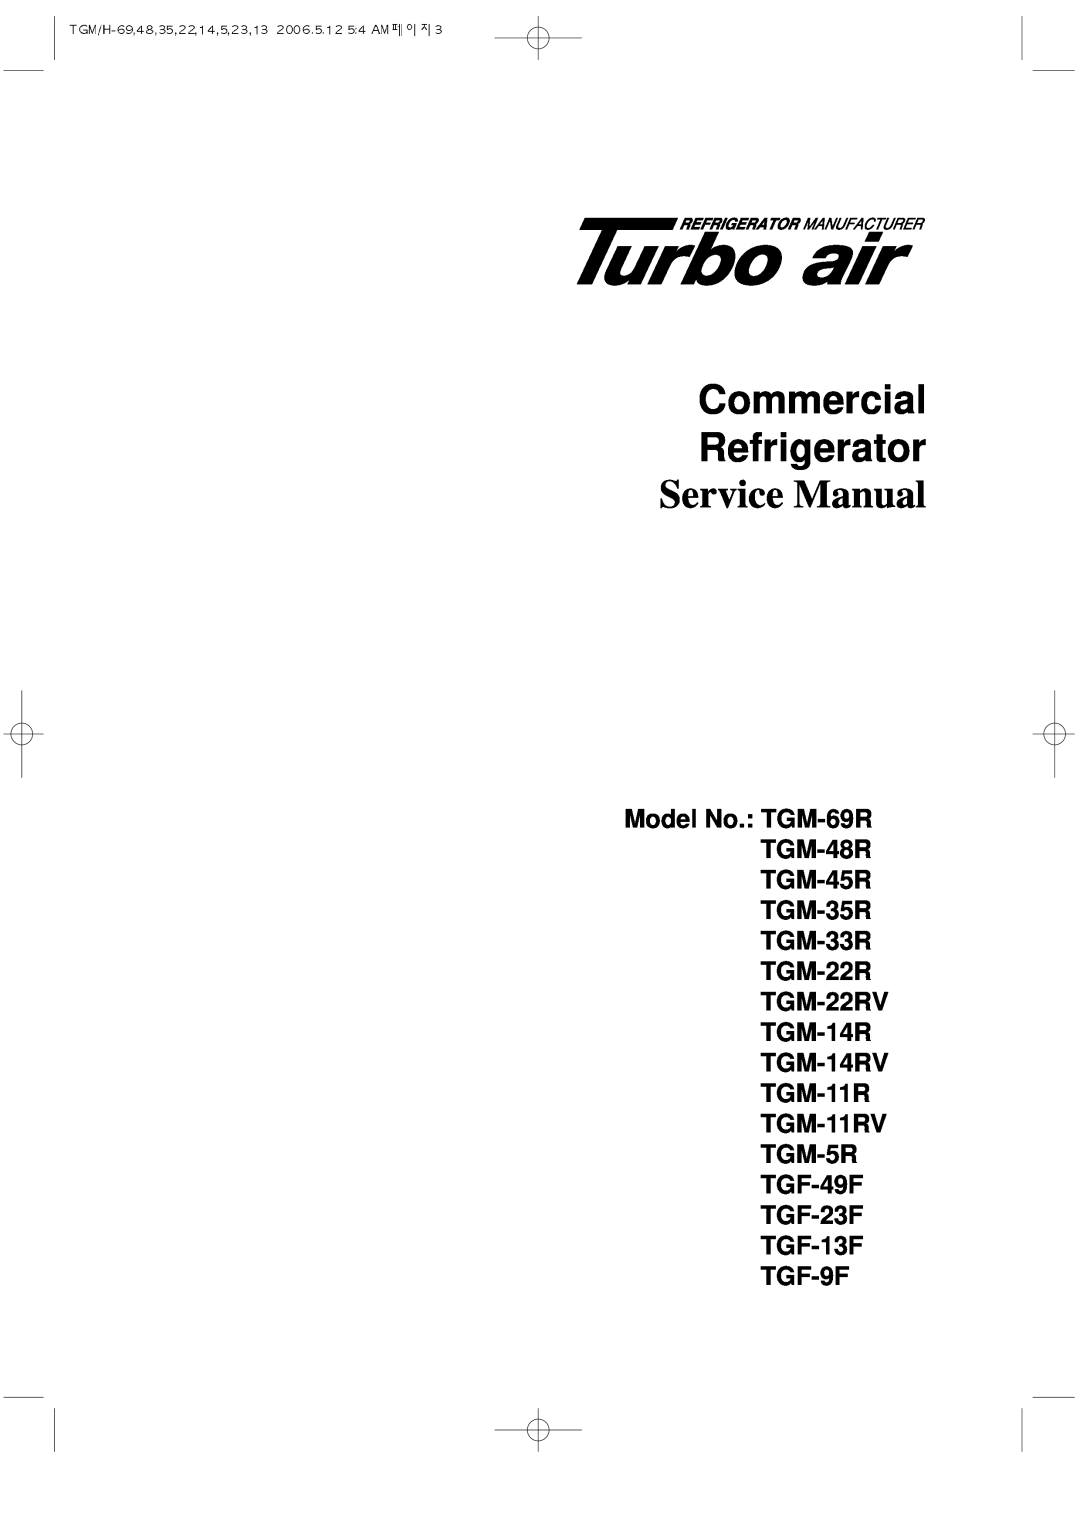 Turbo Air TGM-48R, TGM-5R, TGM-22R, TGM-11RV, TGM-14R, TGM-69R, TGM-45R, TGM-35R manual Commercial Refrigerator, Service Manual 